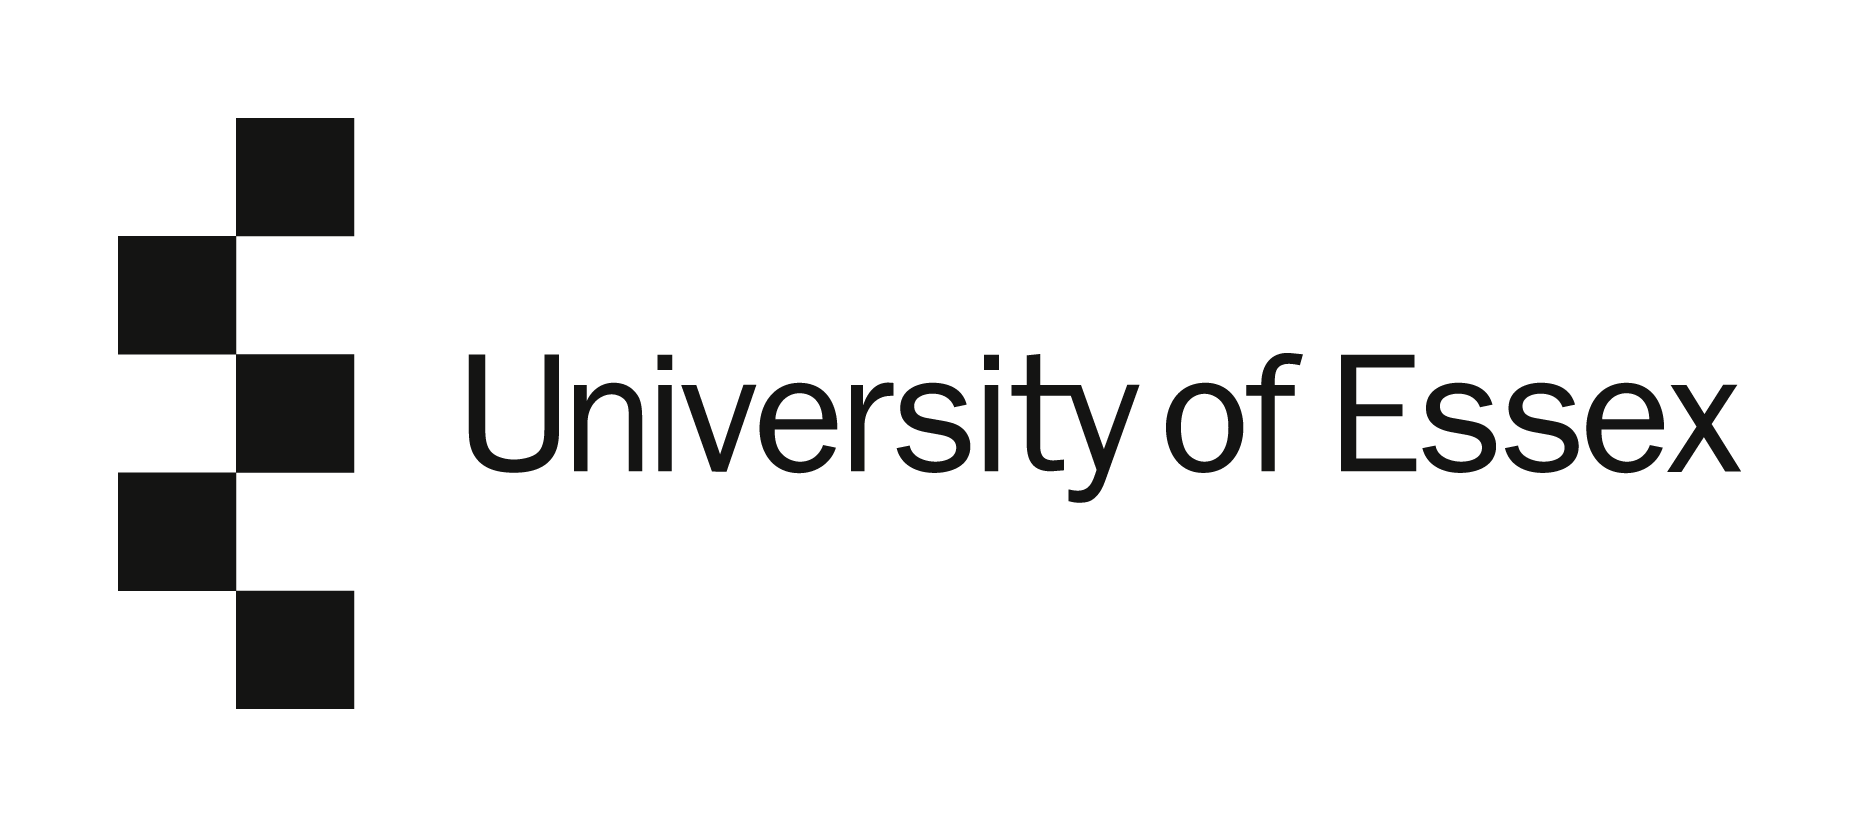 Essex University logo